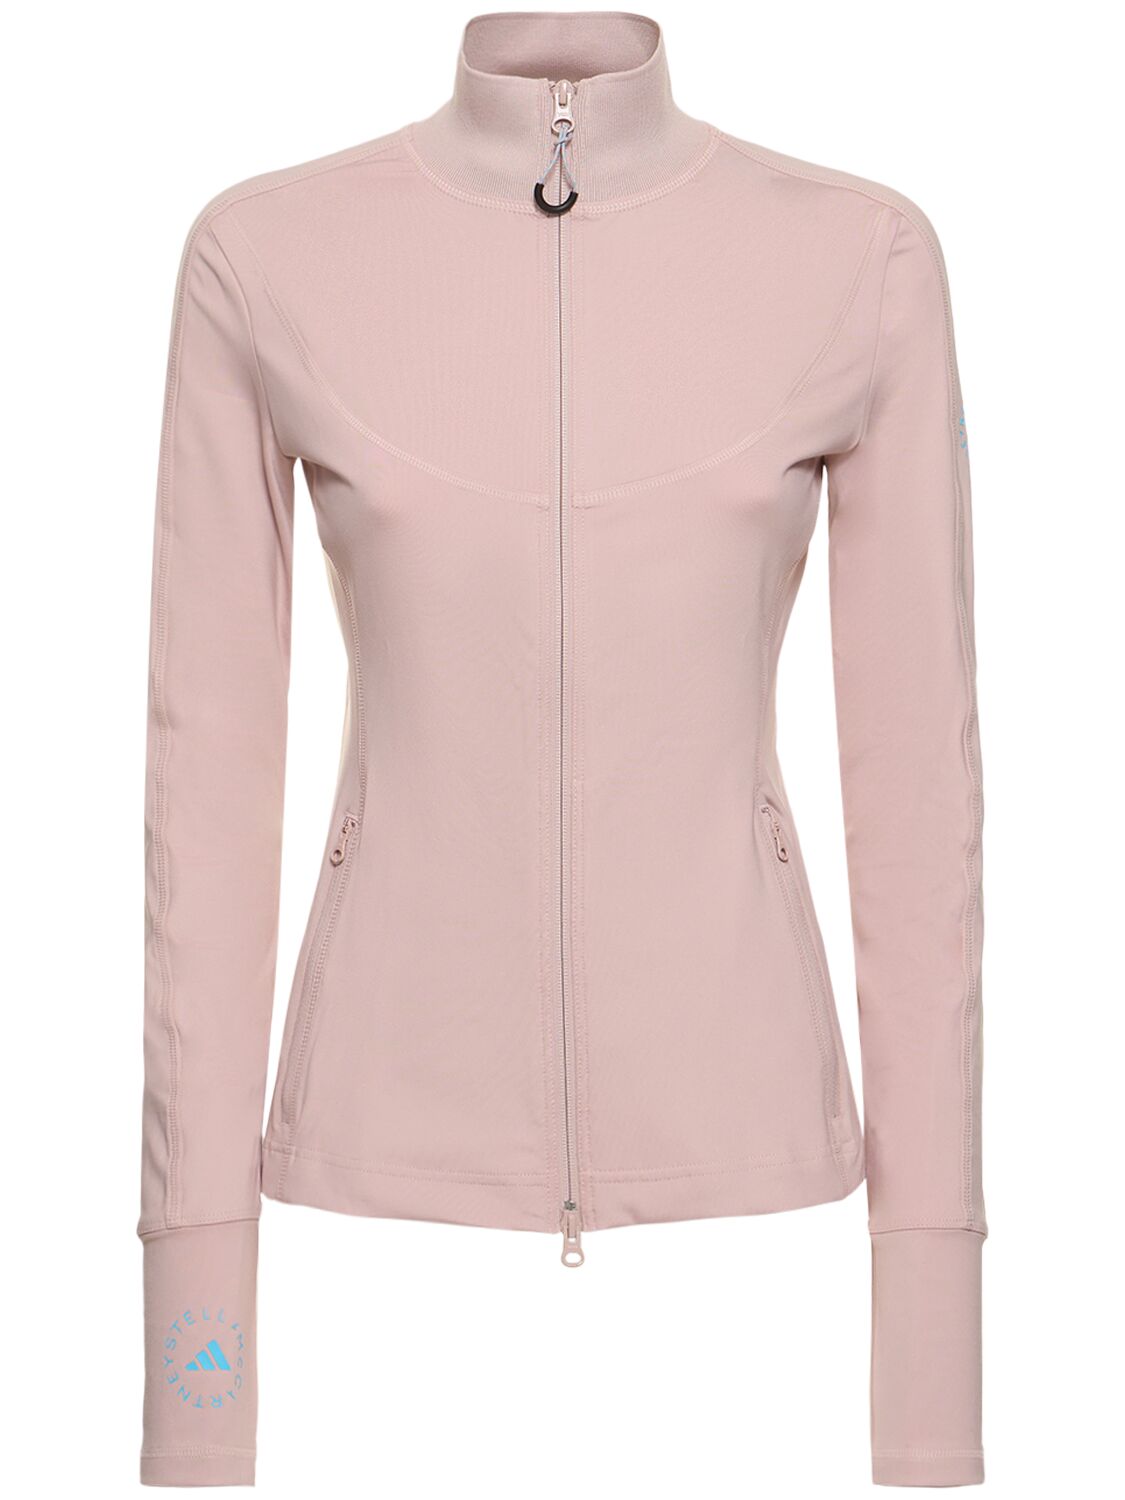 Adidas By Stella Mccartney Truepurpose Training Mid-layer Top In Pink